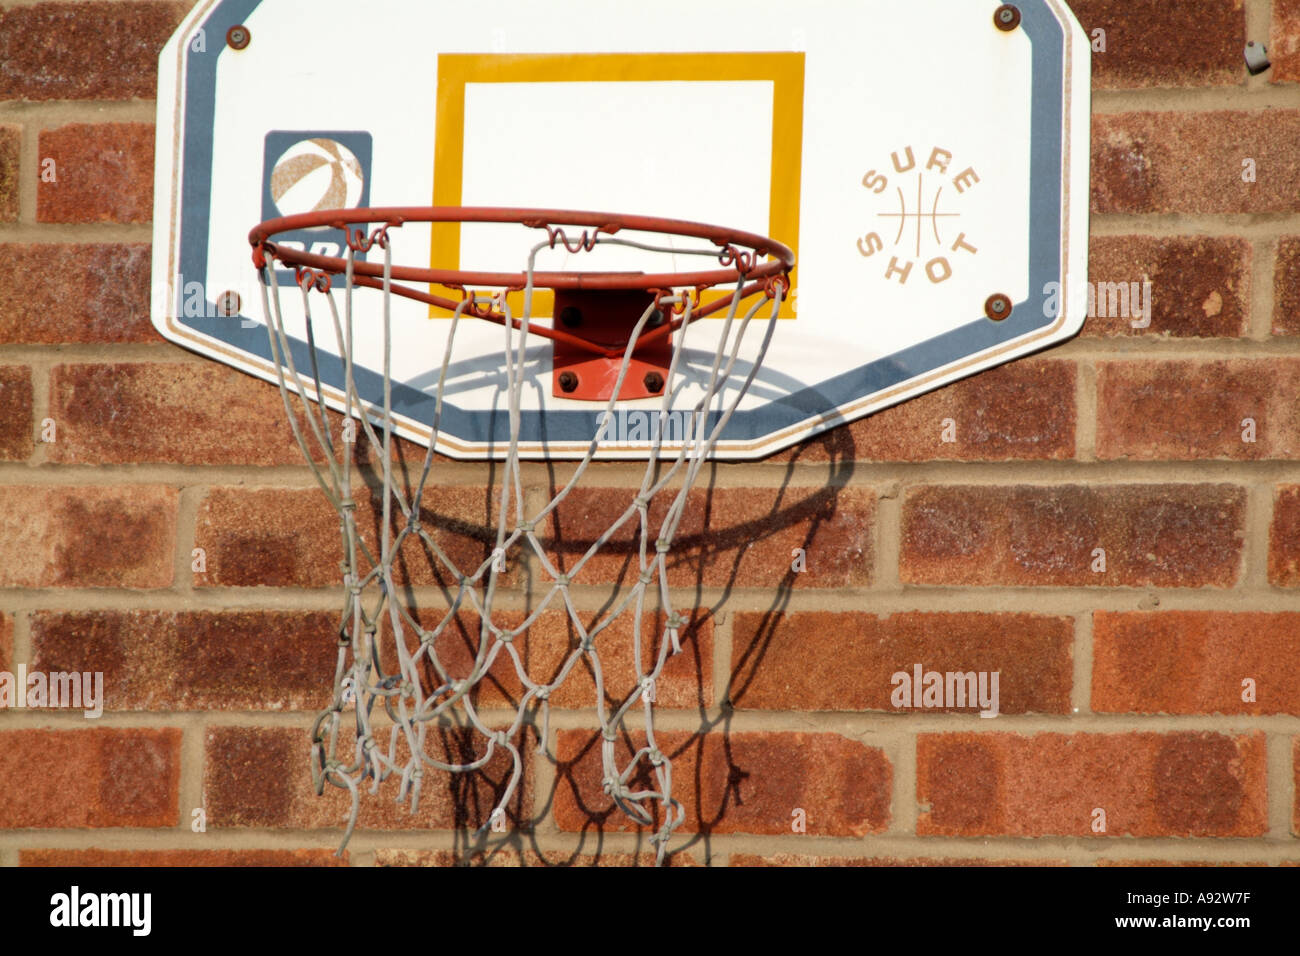 basketball hoop ring netball sport shot shoot slam dunk basket score youth Stock Photo